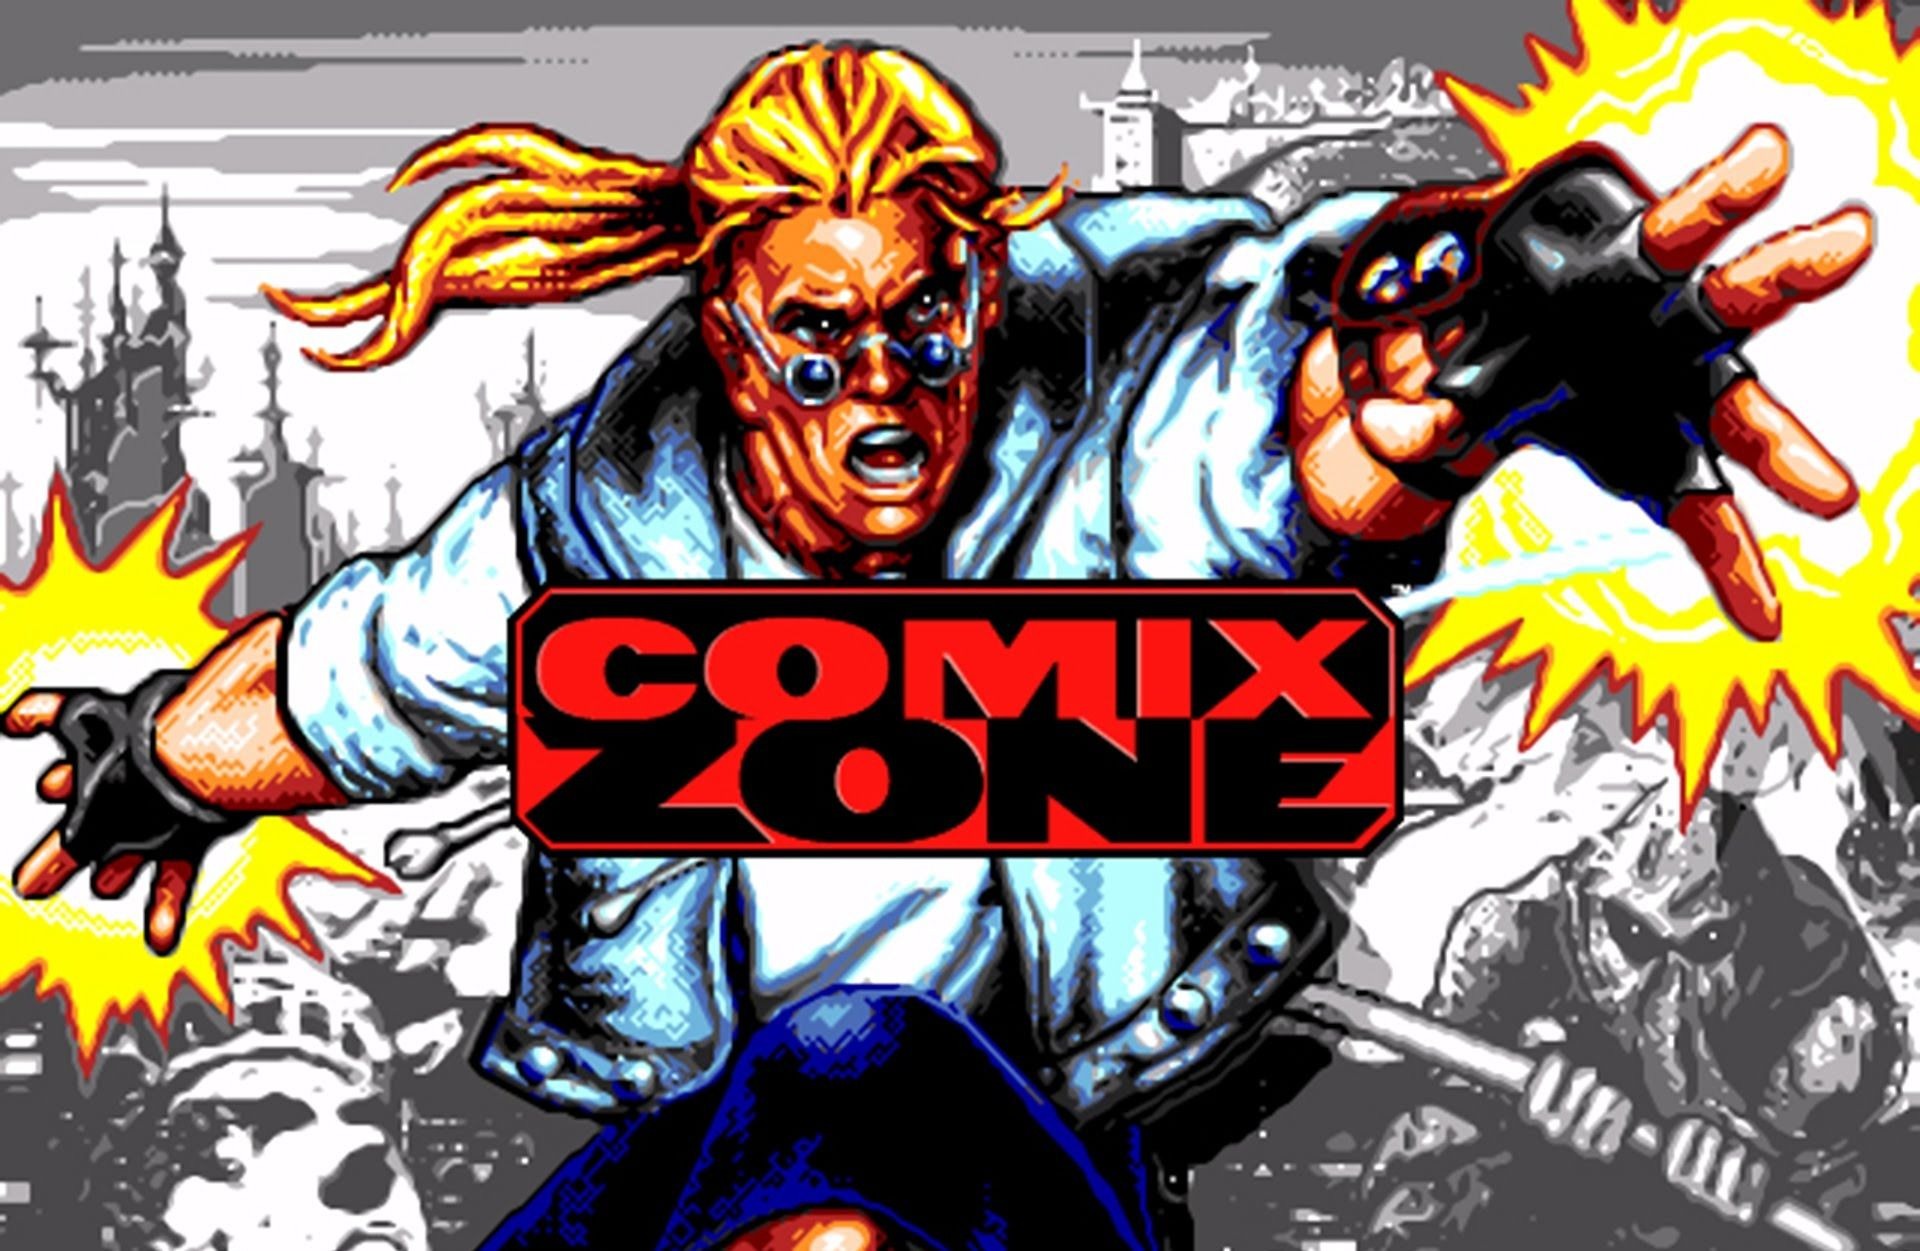 Комикс над которым работает скетч тернер. Comix Zone игра. Comix Zone Sega. Комикс зон арт. Sketch Turner comix Zone.